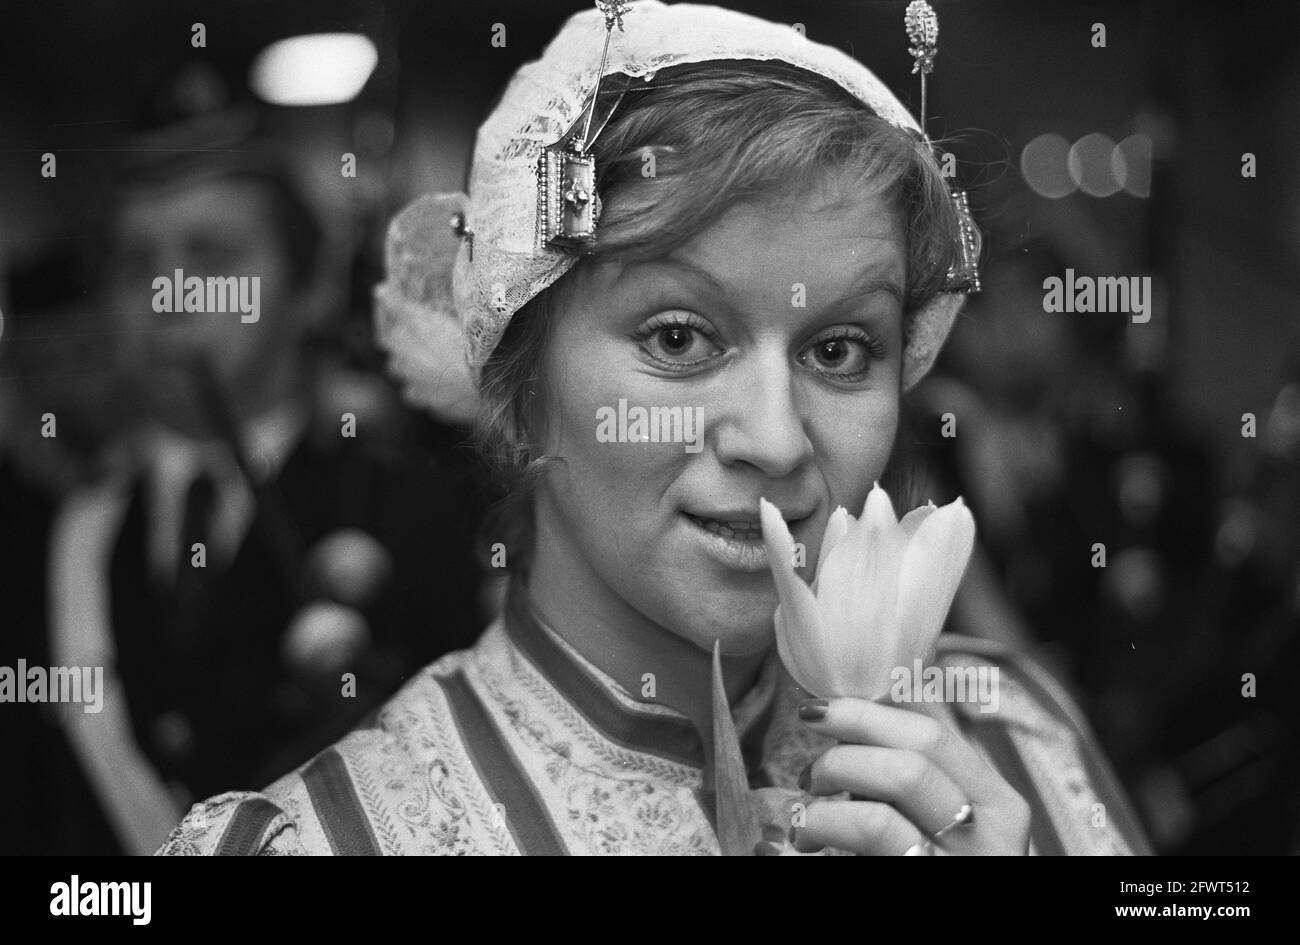 Frisian girl Black and White Stock Photos & Images - Alamy